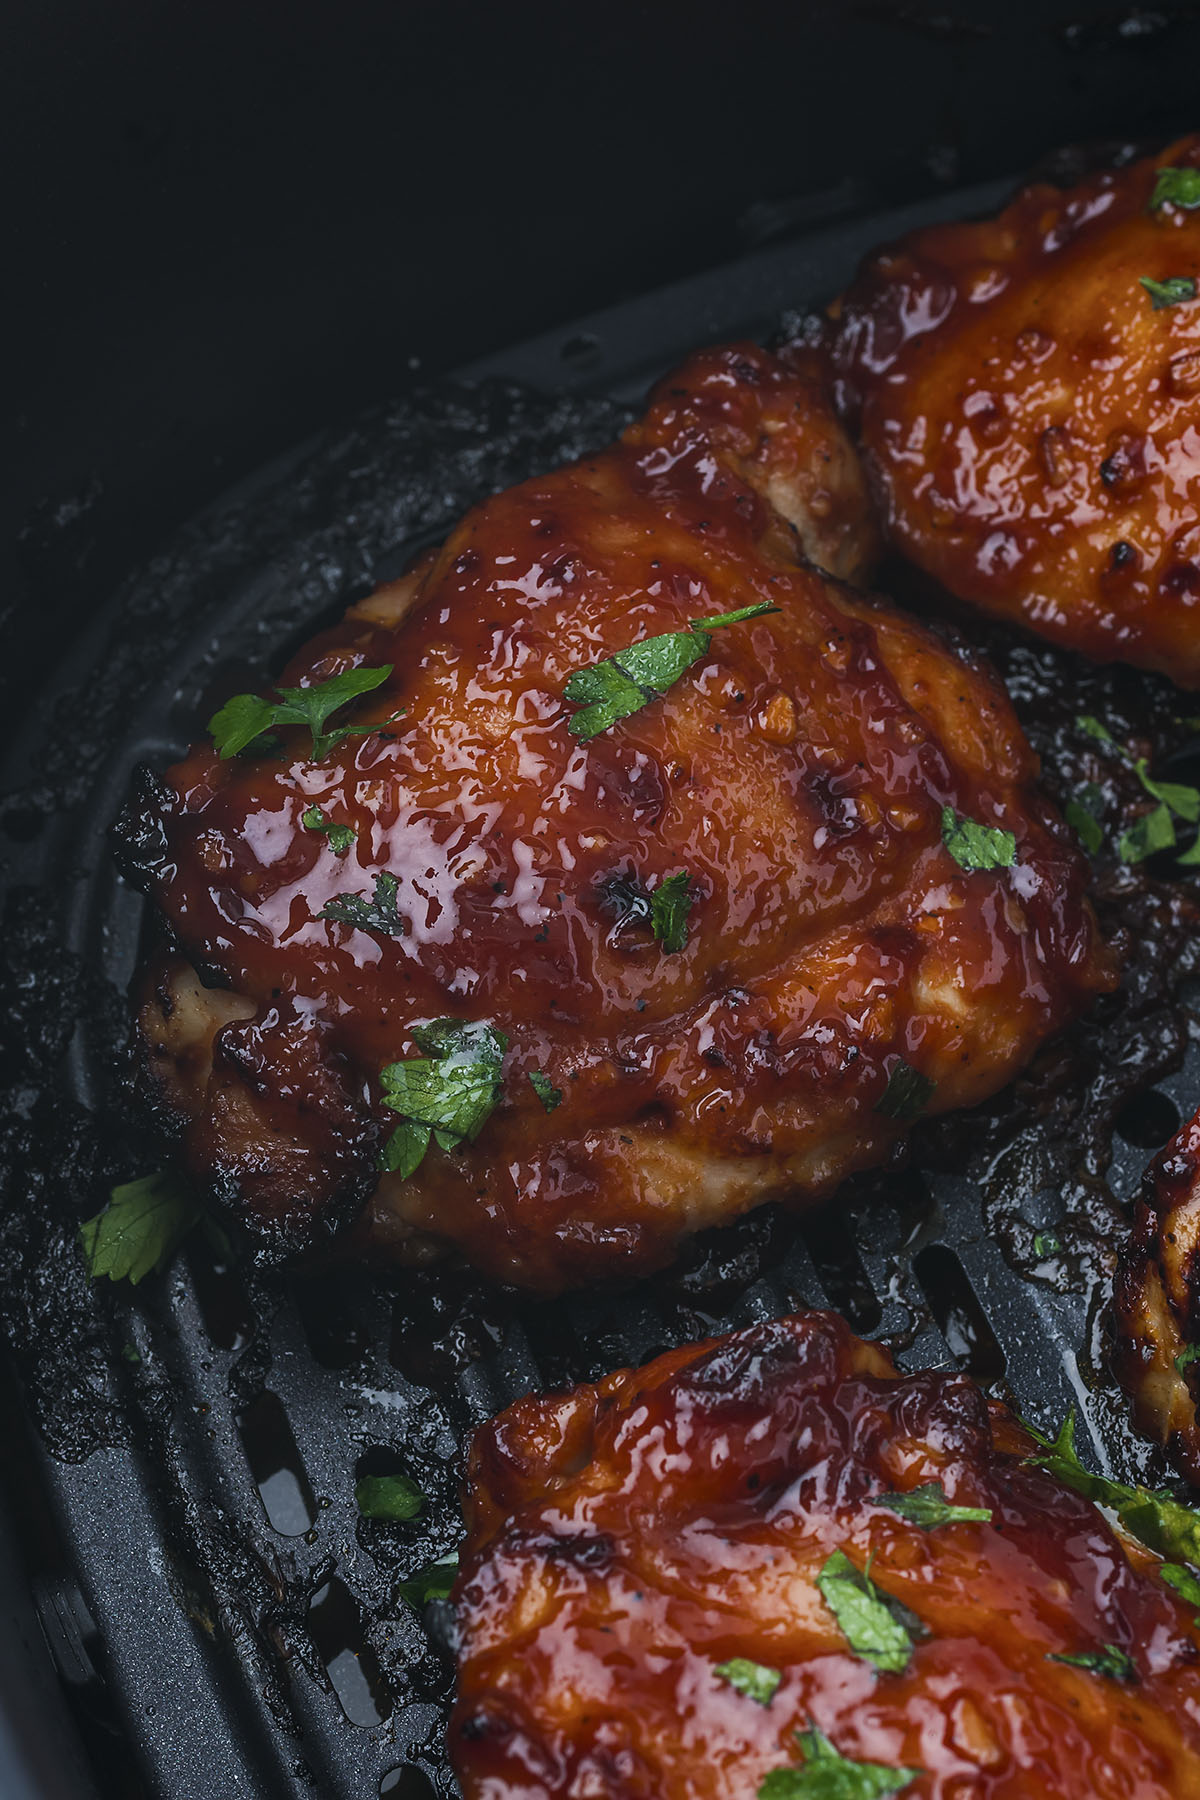 A close up of BBQ chicken thighs, garnished, in an air fryer basket.